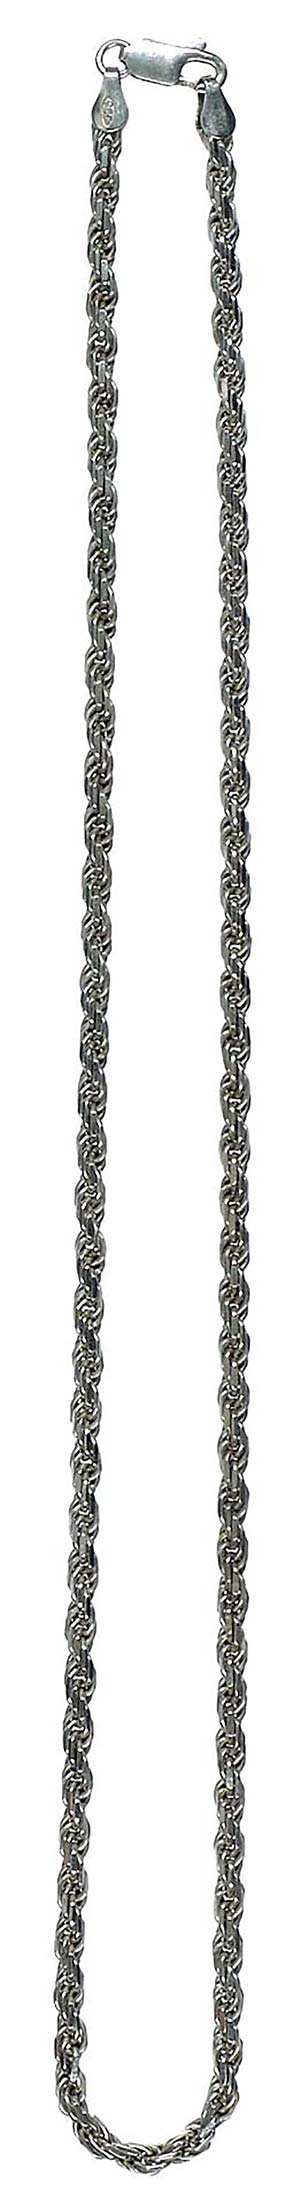 Necklaces without Gems Triplex anchor chain. ... 